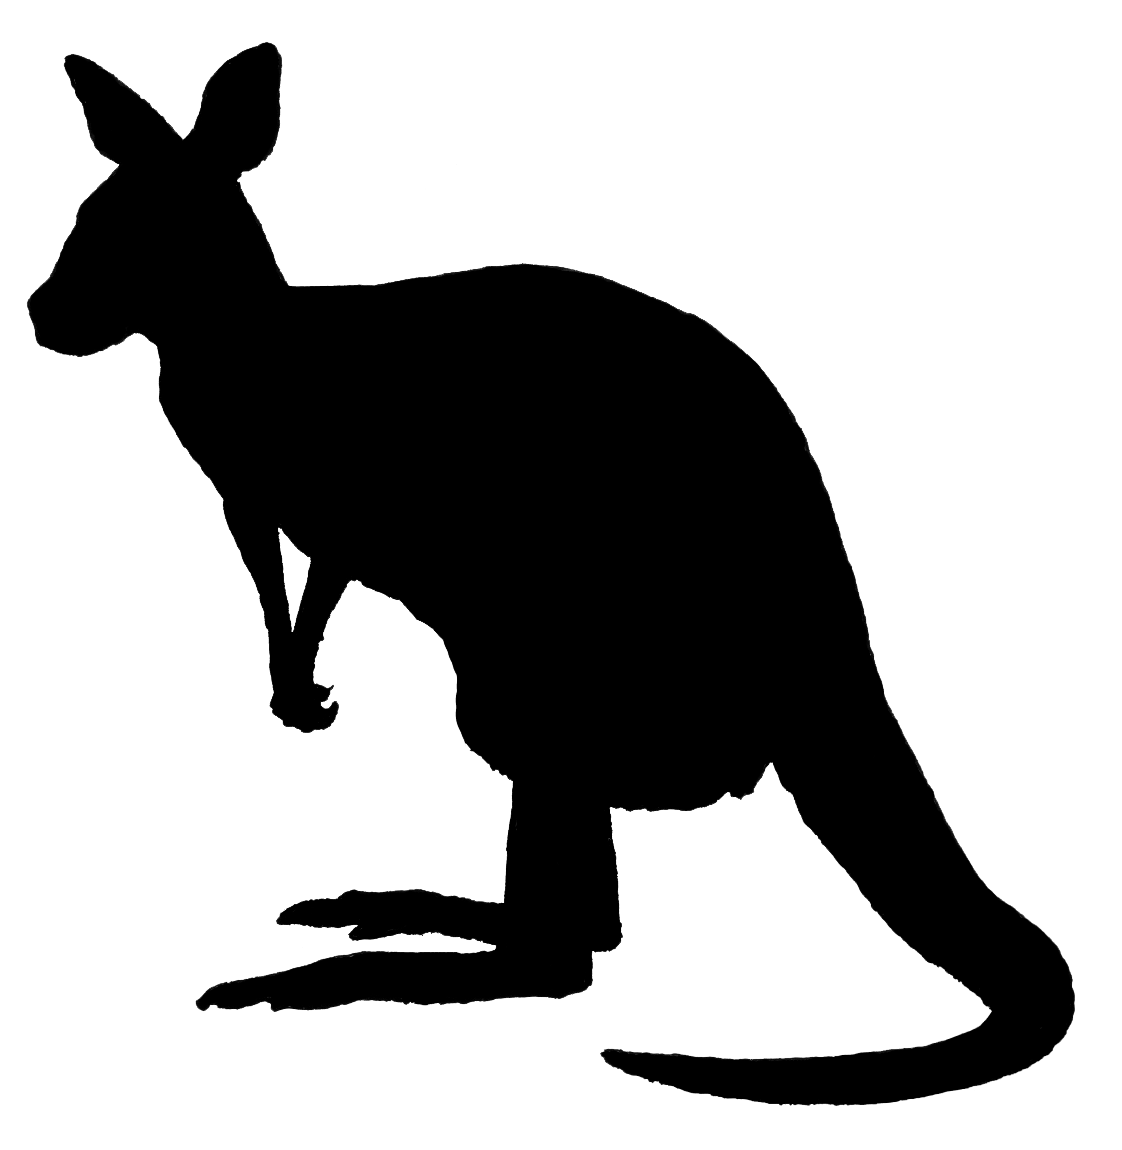 Kangaroo clipart silhouette. At getdrawings com free